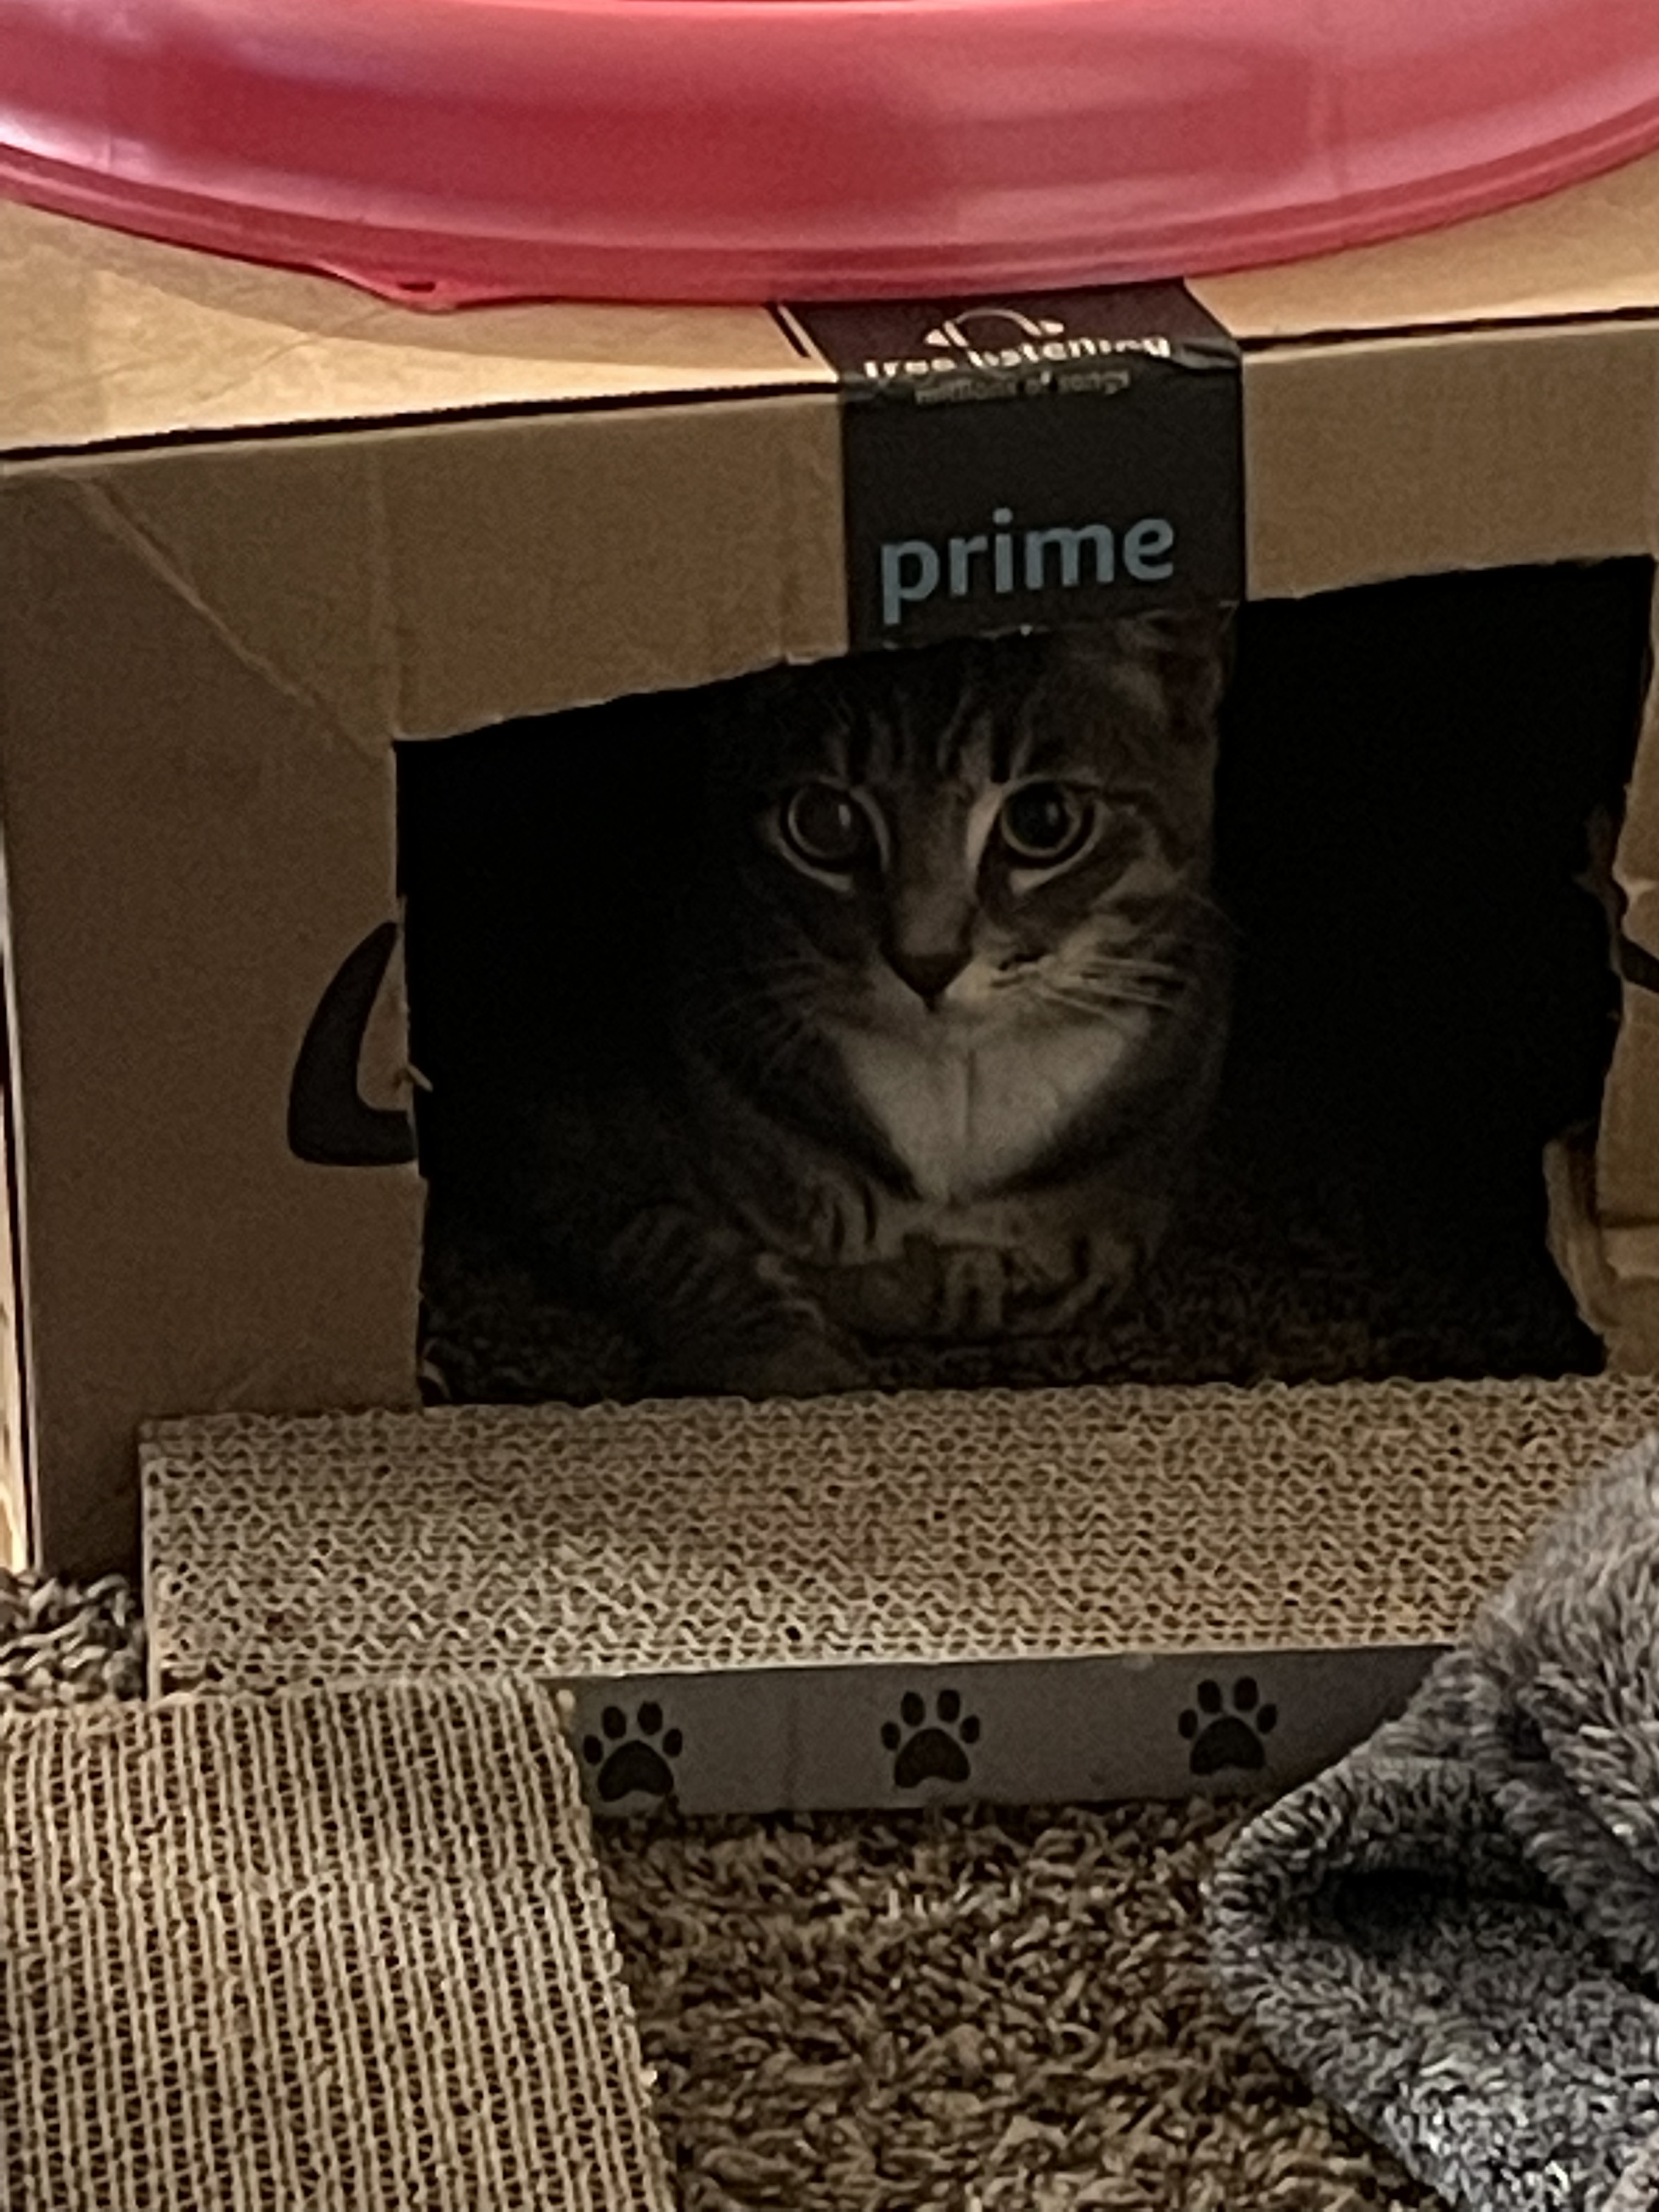 gray cat hiding inside an Amazon box